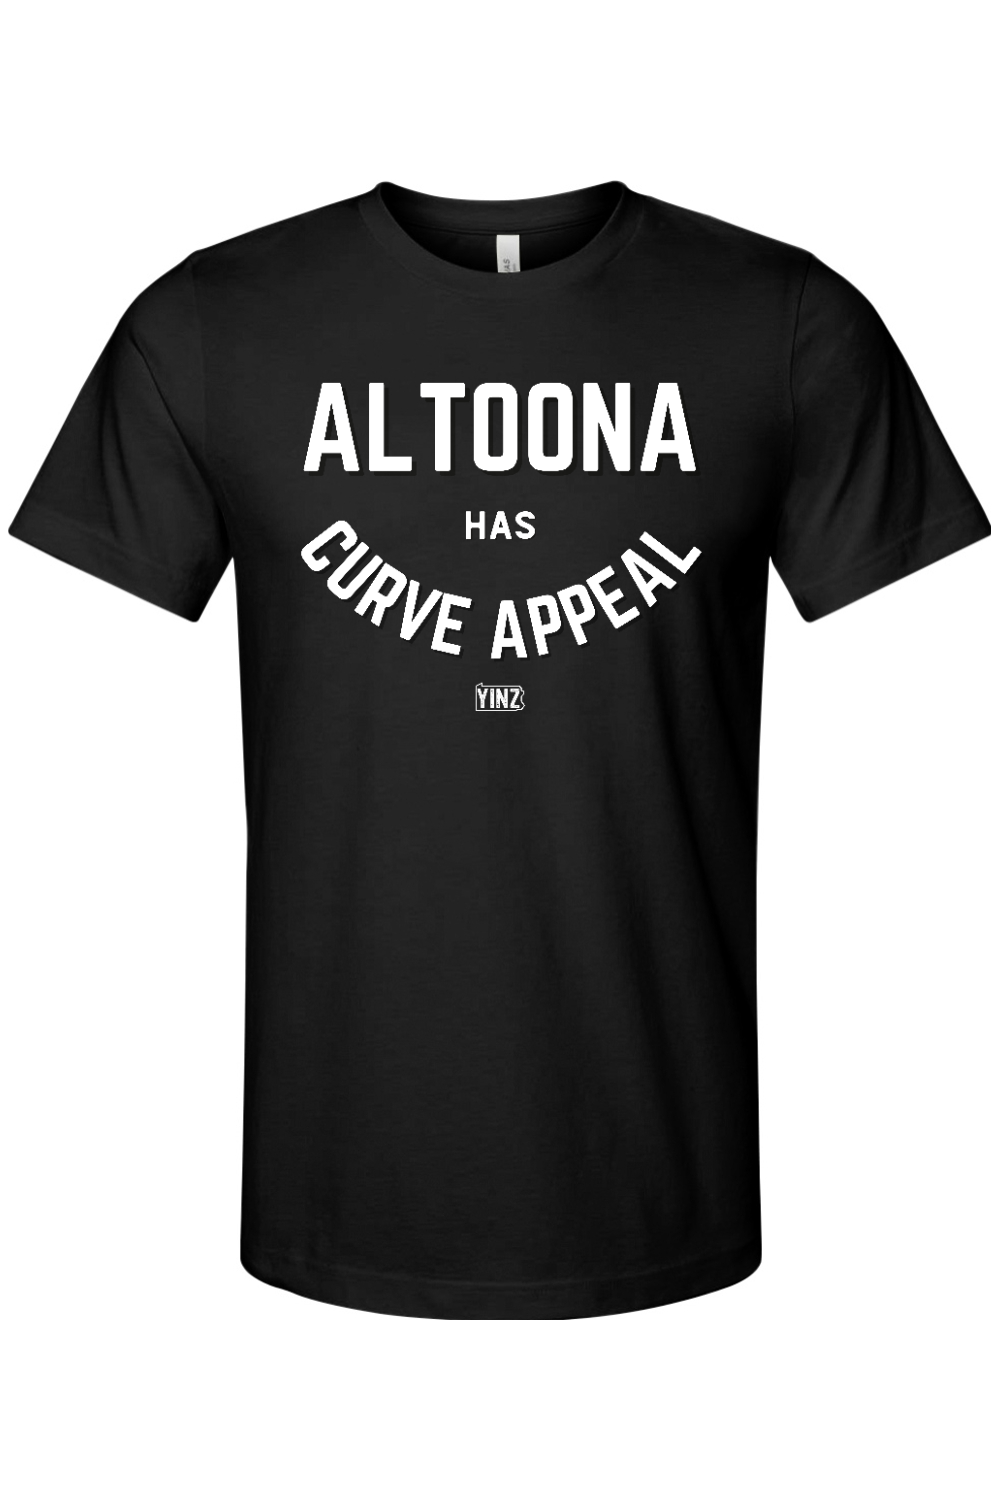 Altoona Has Curve Appeal - Yinzylvania